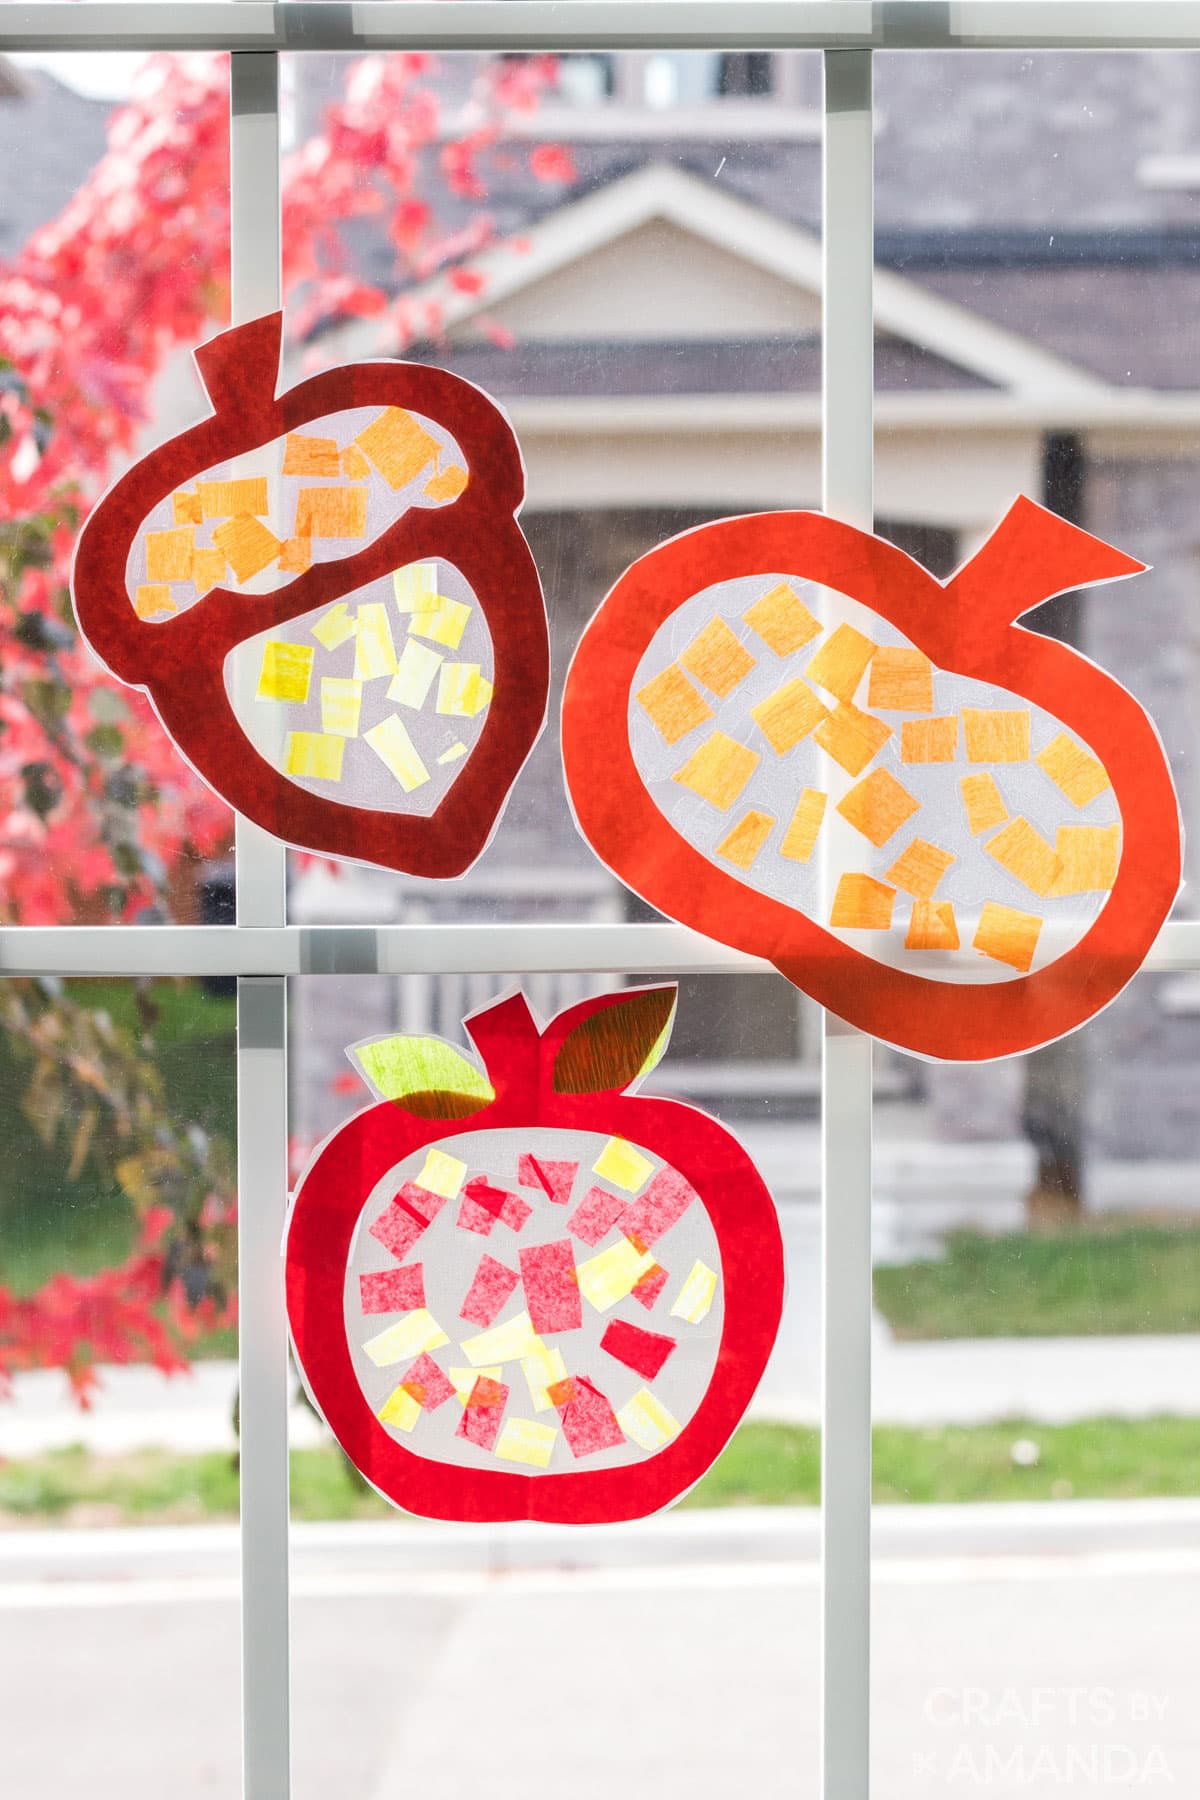 3 fall themed sun catchers on a window